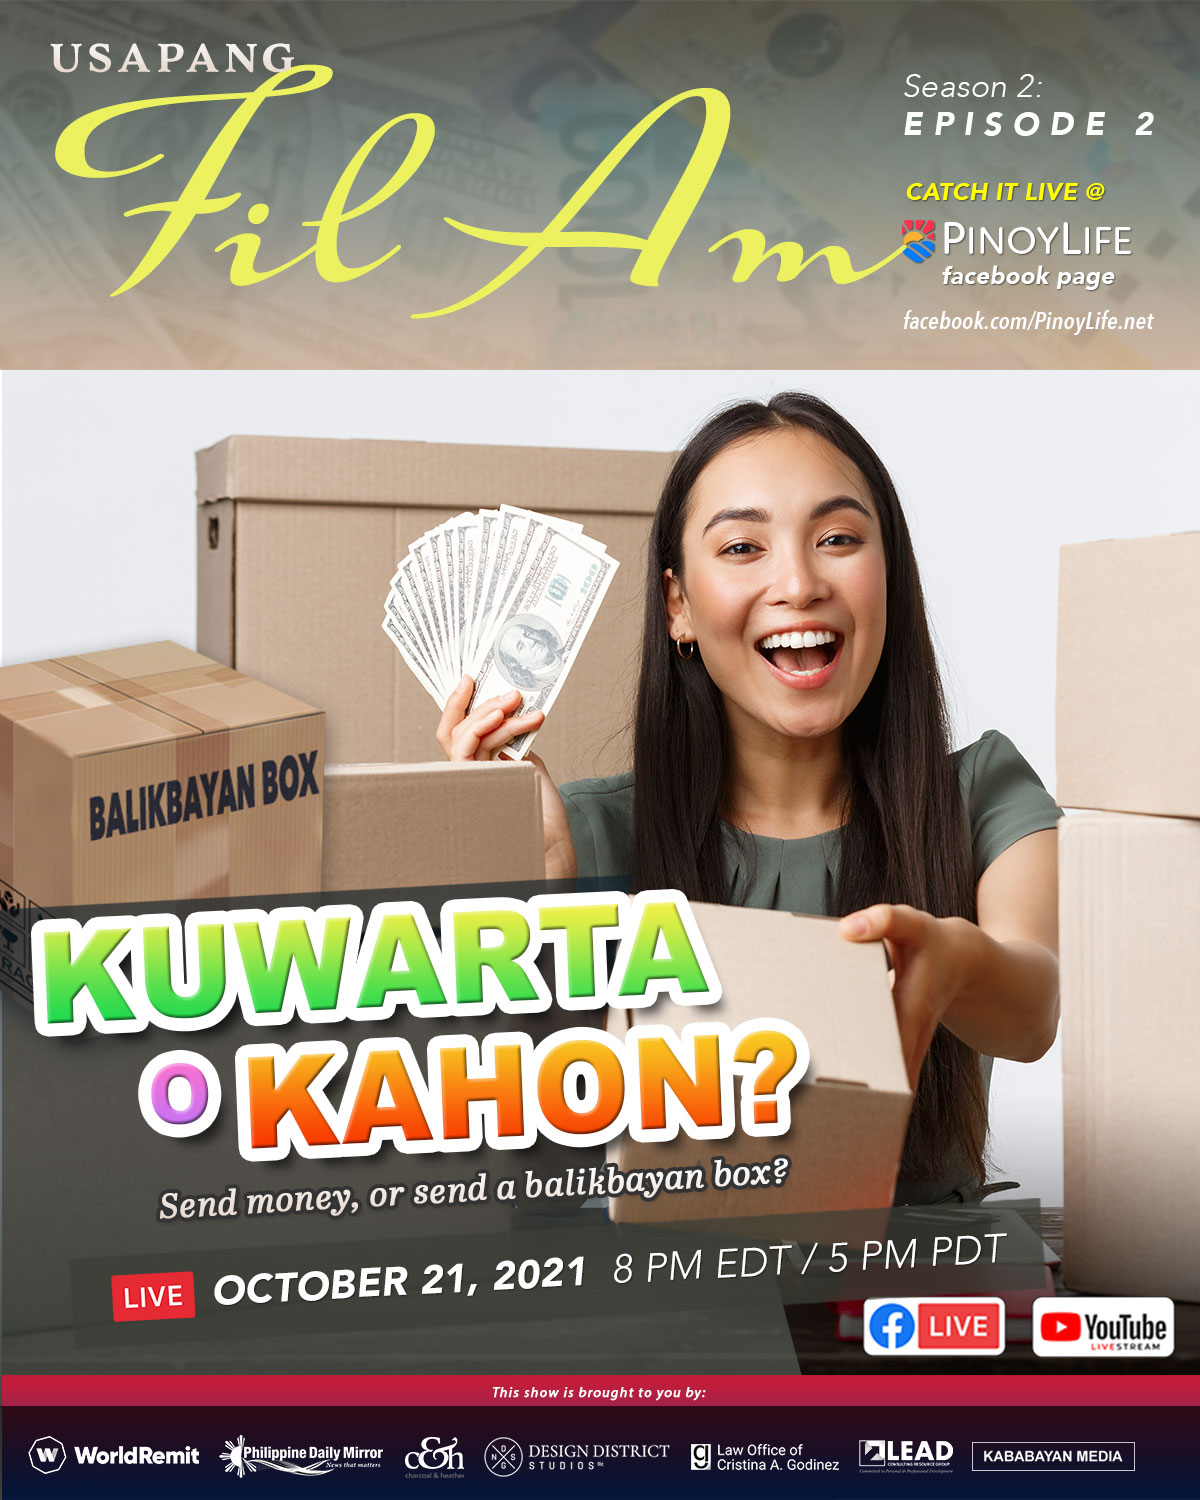 Usapang Fil Am | Season 2, Episode 2: Kwarta o Kahon?